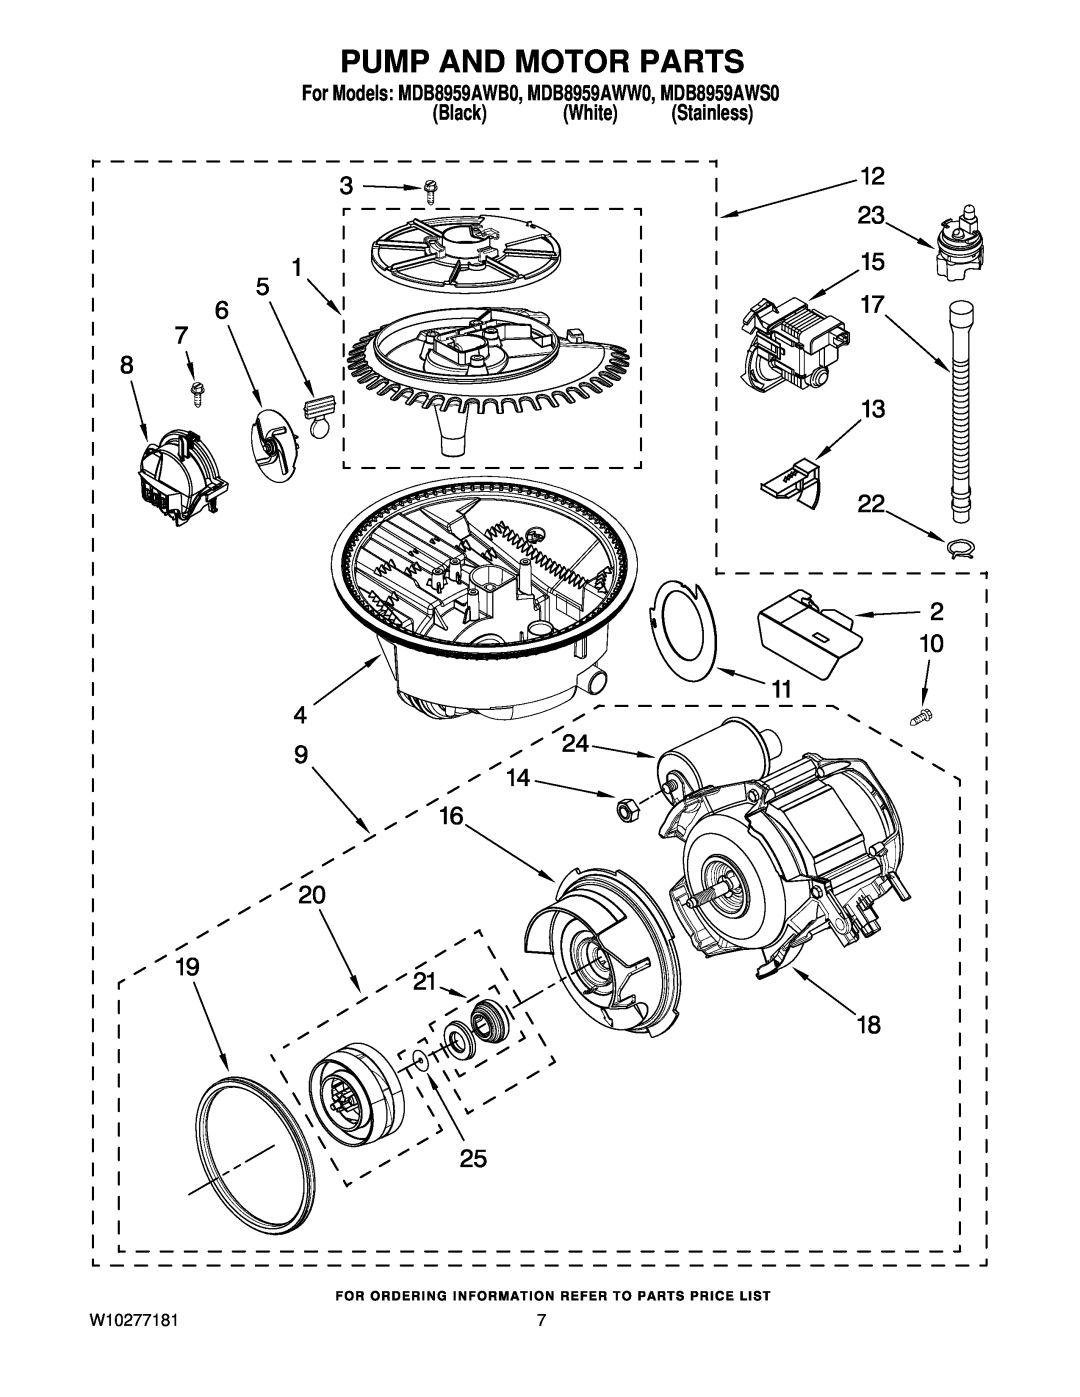 Maytag manual Pump And Motor Parts, Black, White, For Models MDB8959AWB0, MDB8959AWW0, MDB8959AWS0, Stainless 